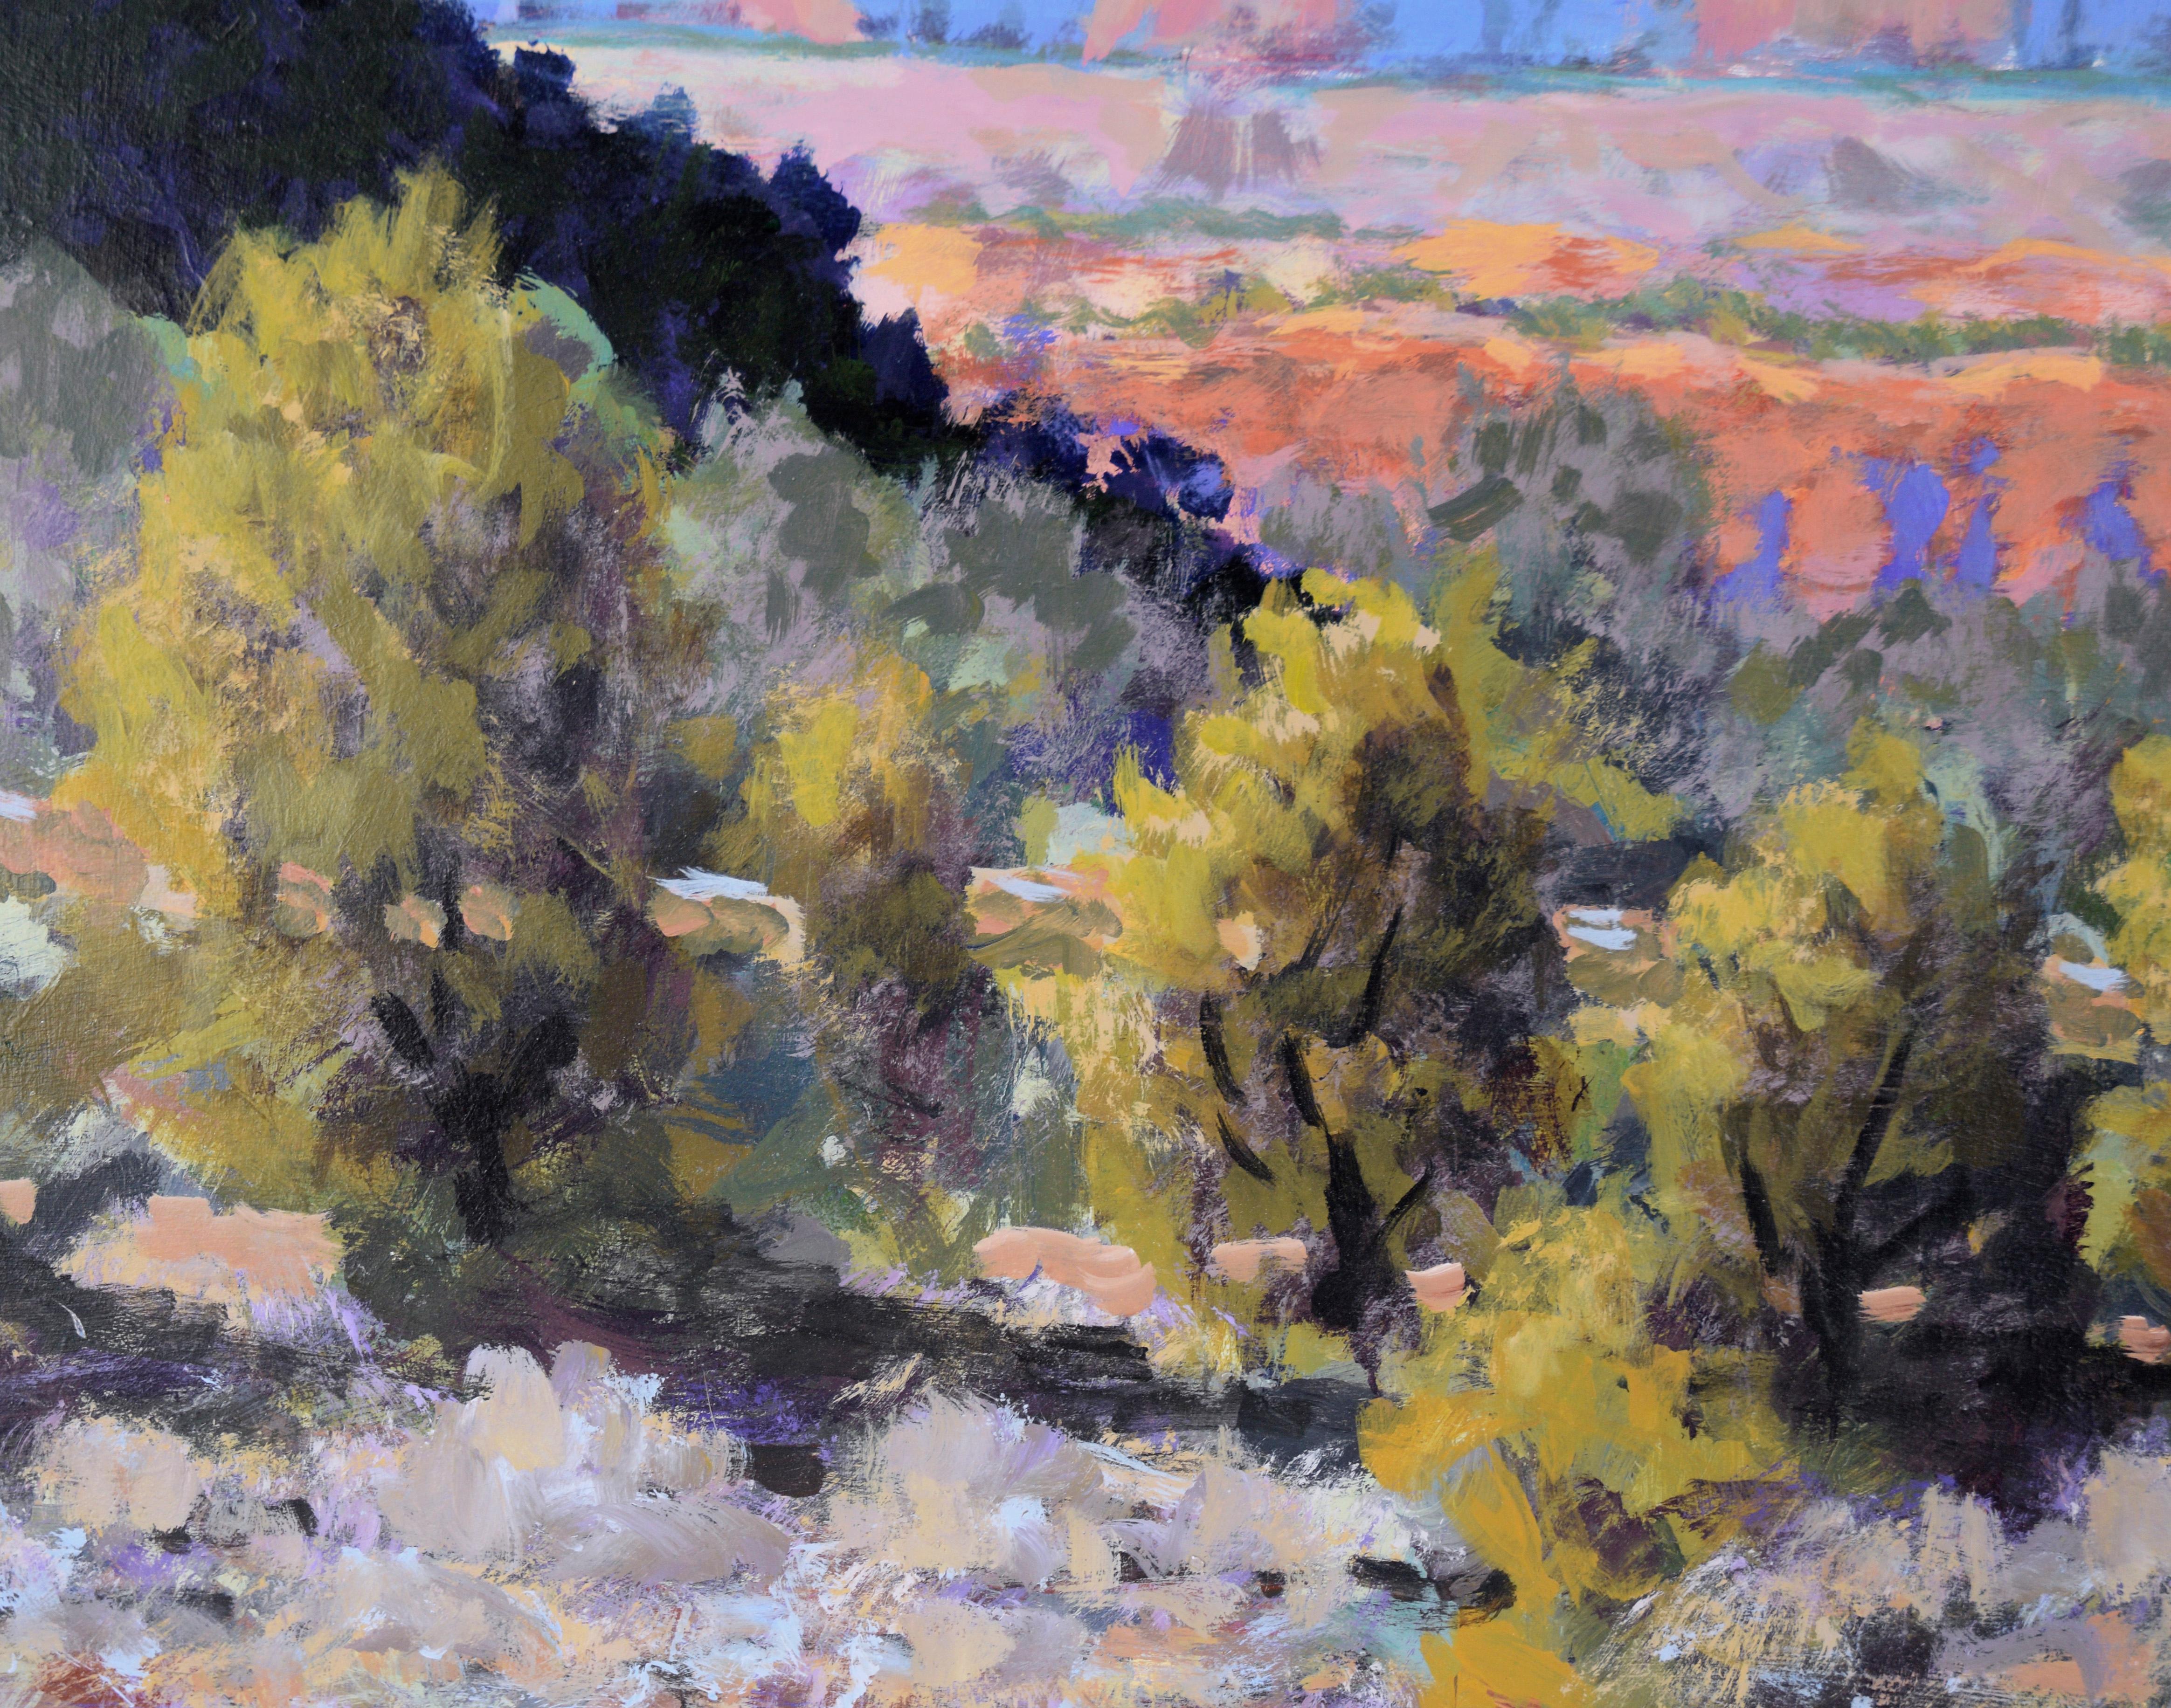 Red Cliffs in the Desert - Western Plein Aire Landscape in Acrylic on Board 3